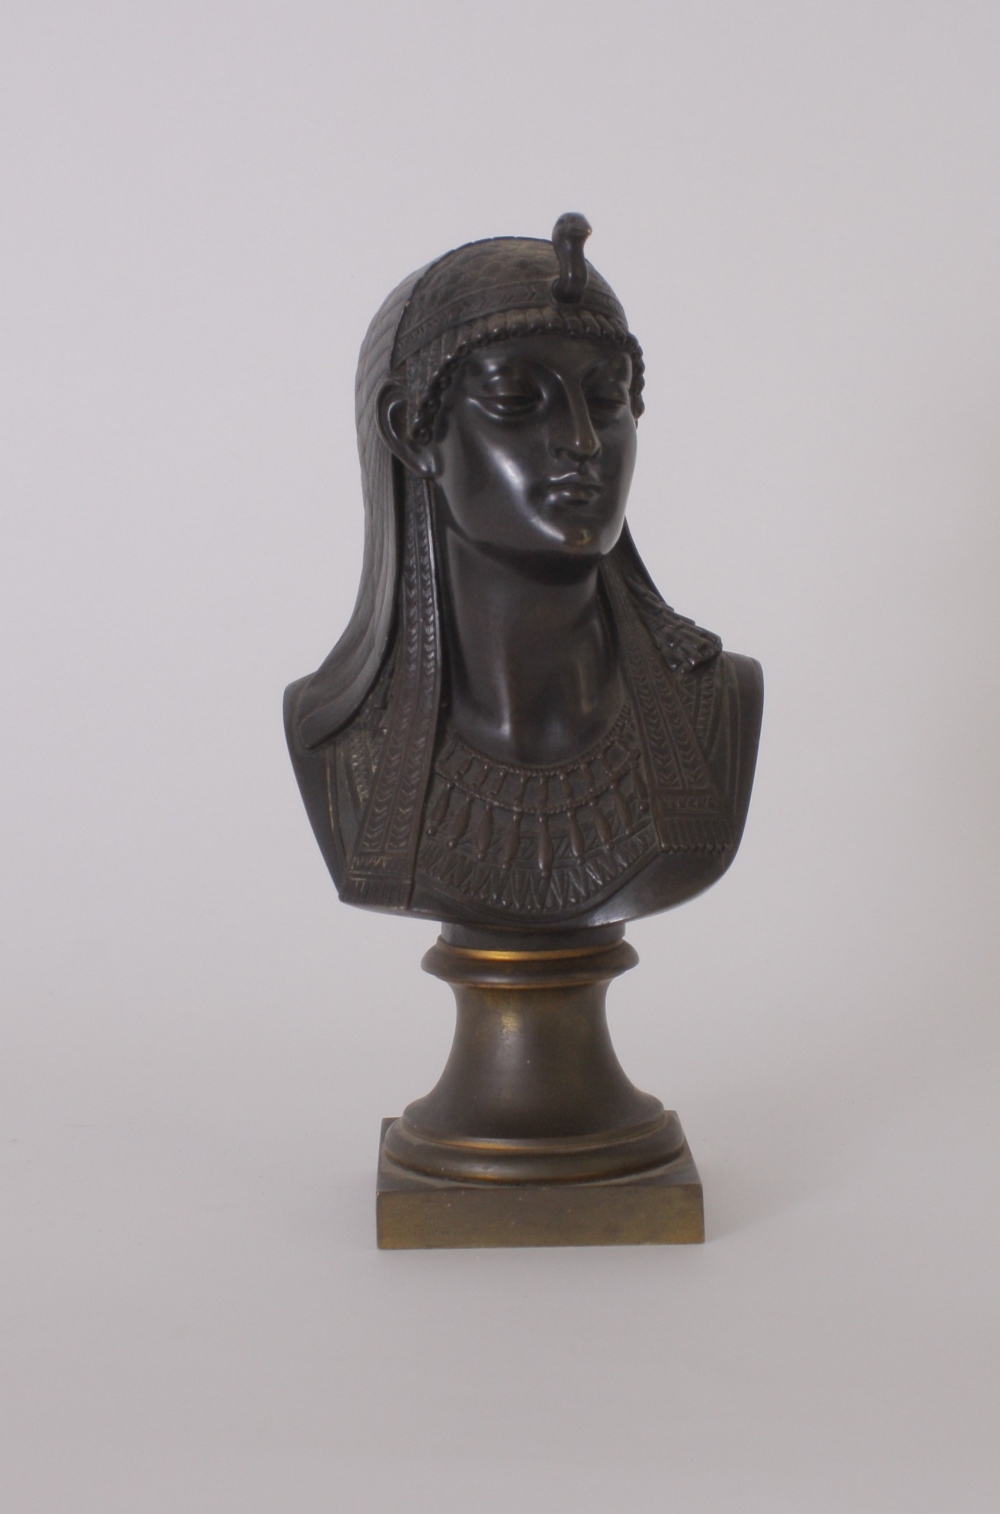 A 19th century orientalist bronze bust of an Egyptian Queen with an ibis headress facing to